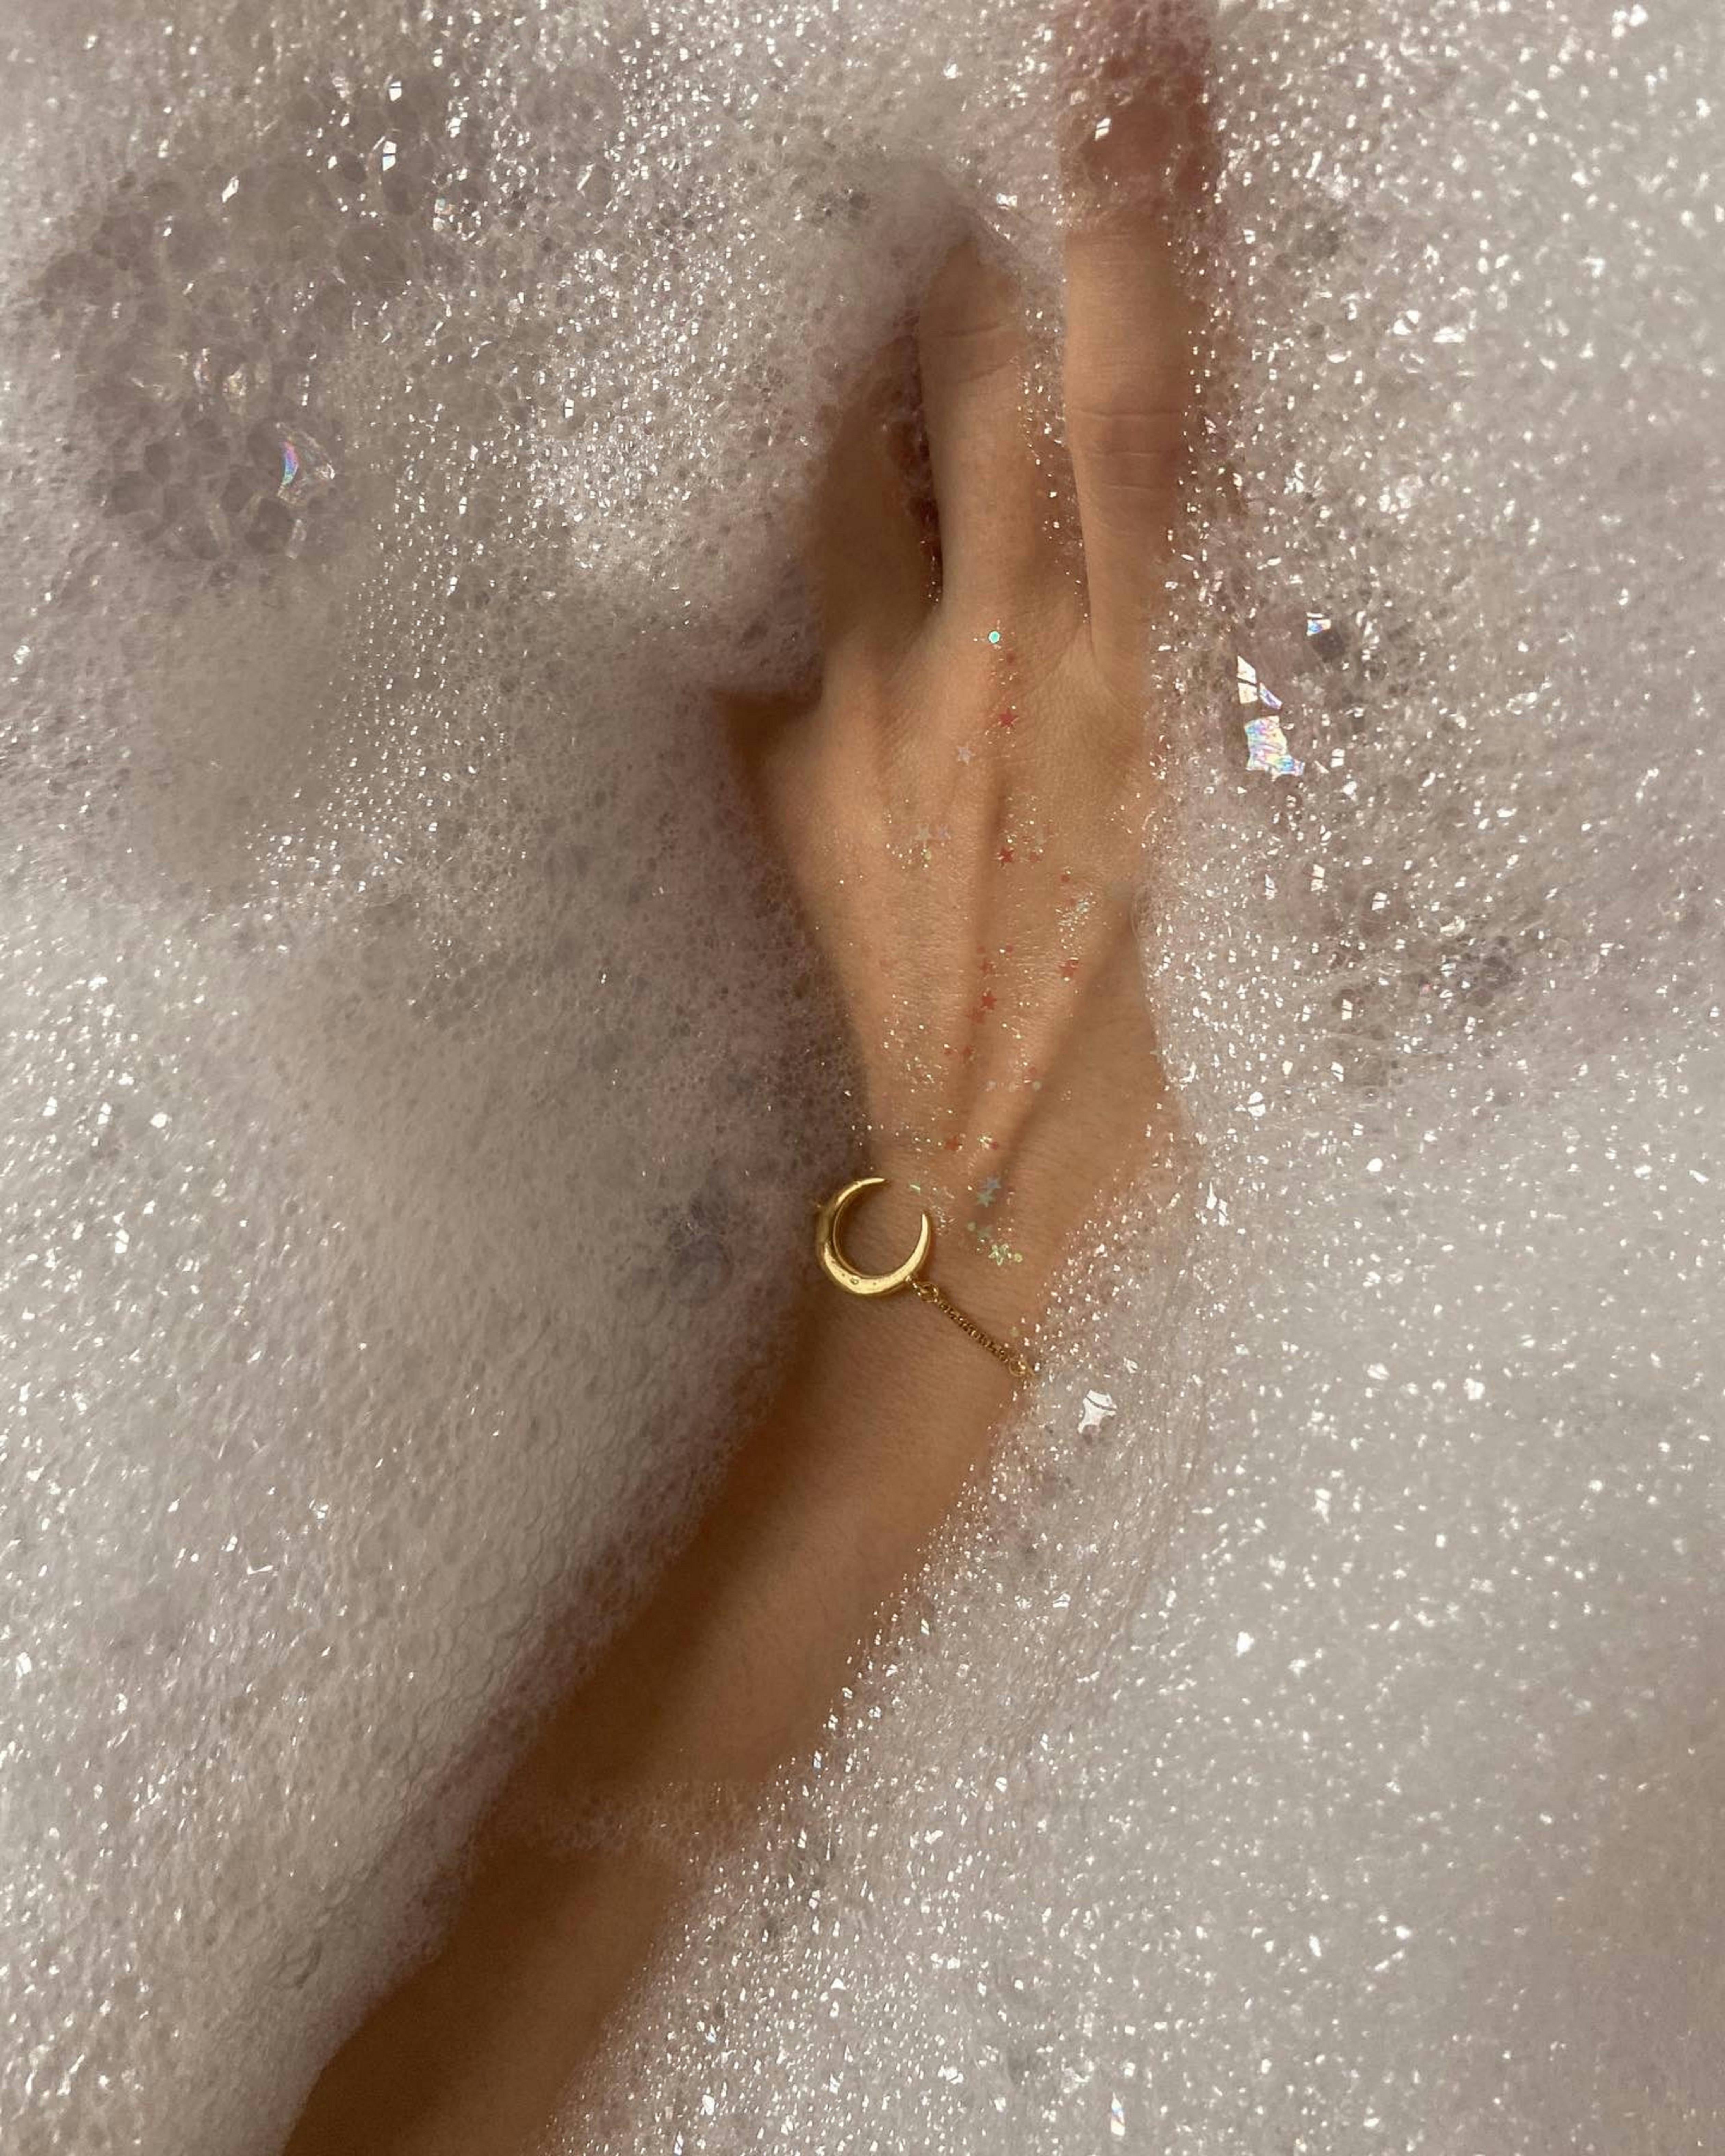 woman with bracelet taking bath with foam